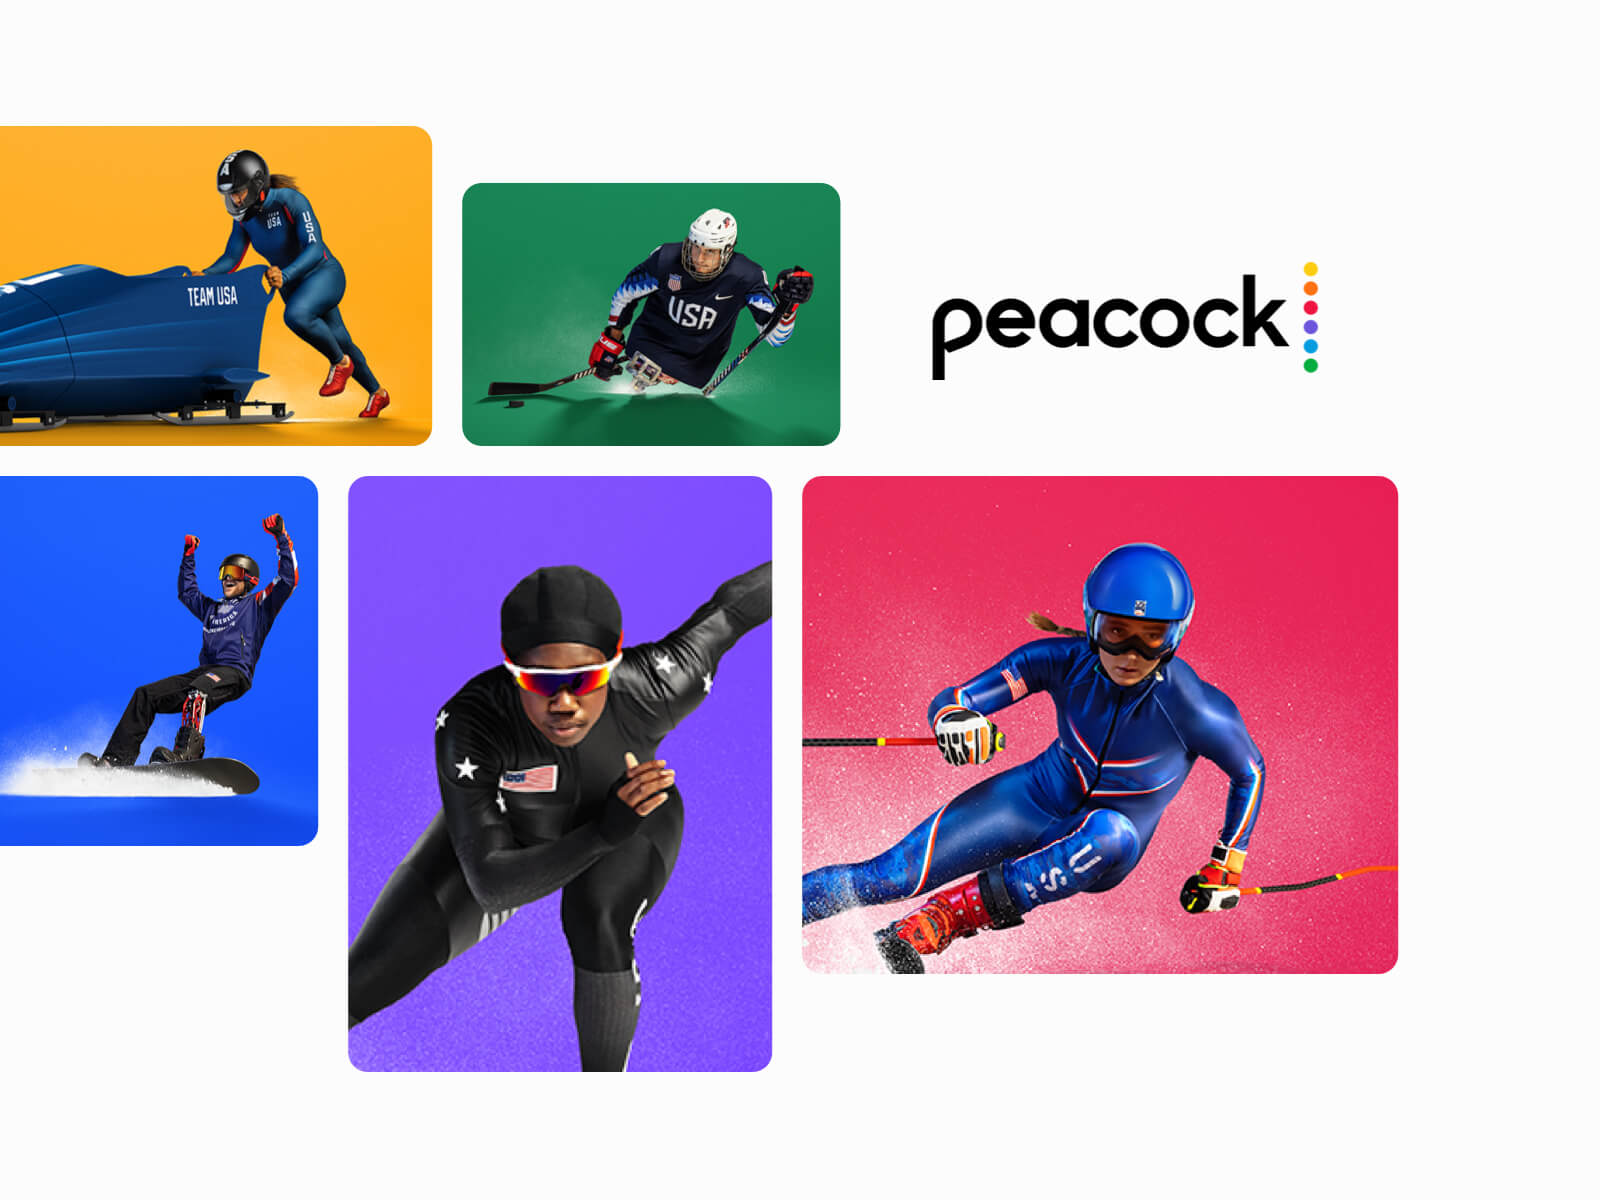 Team USA winter athletes and Peacock logo